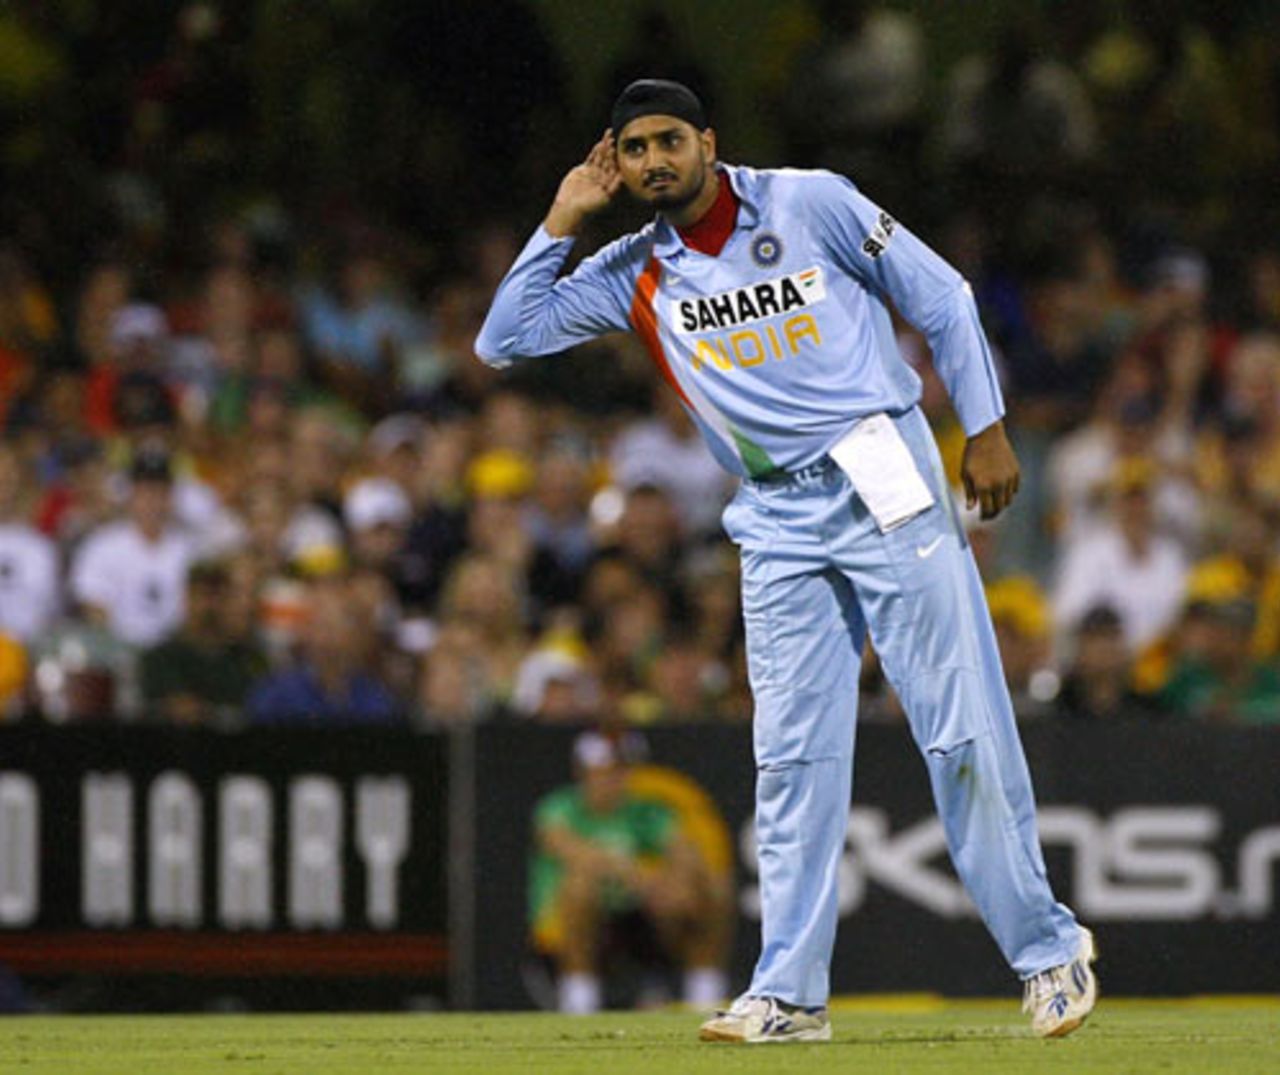 Harbhajan Singh reacts to the crowd's boos, Australia v India, CB series, 1st ODI, Brisbane, February 3, 2008